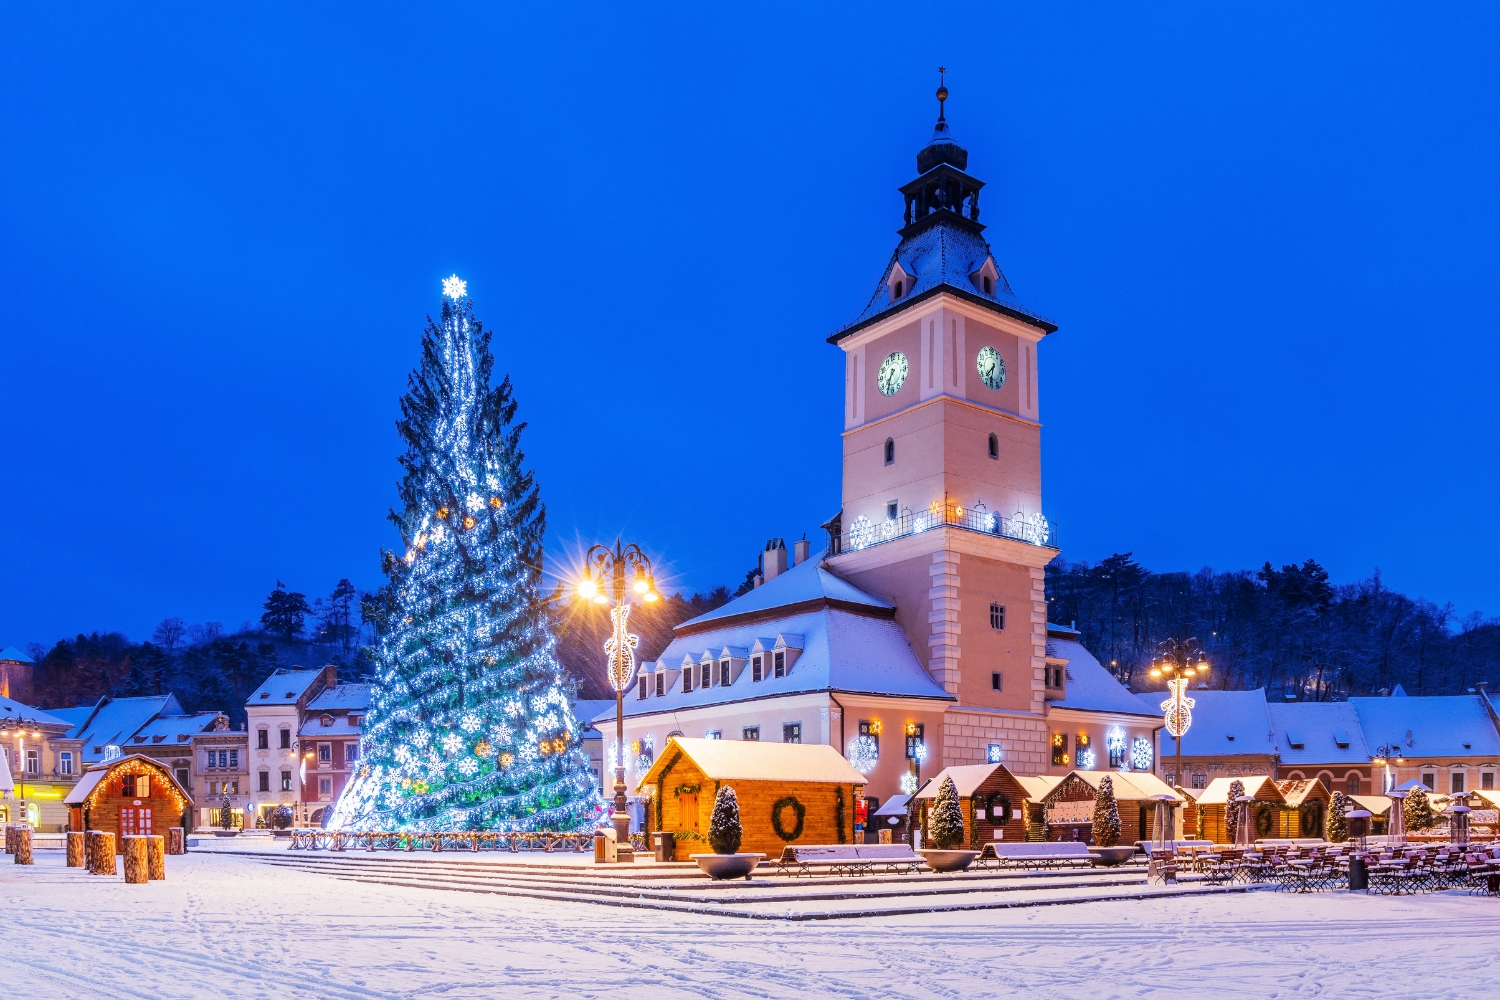 Brasov is a beautiful Christmas destination